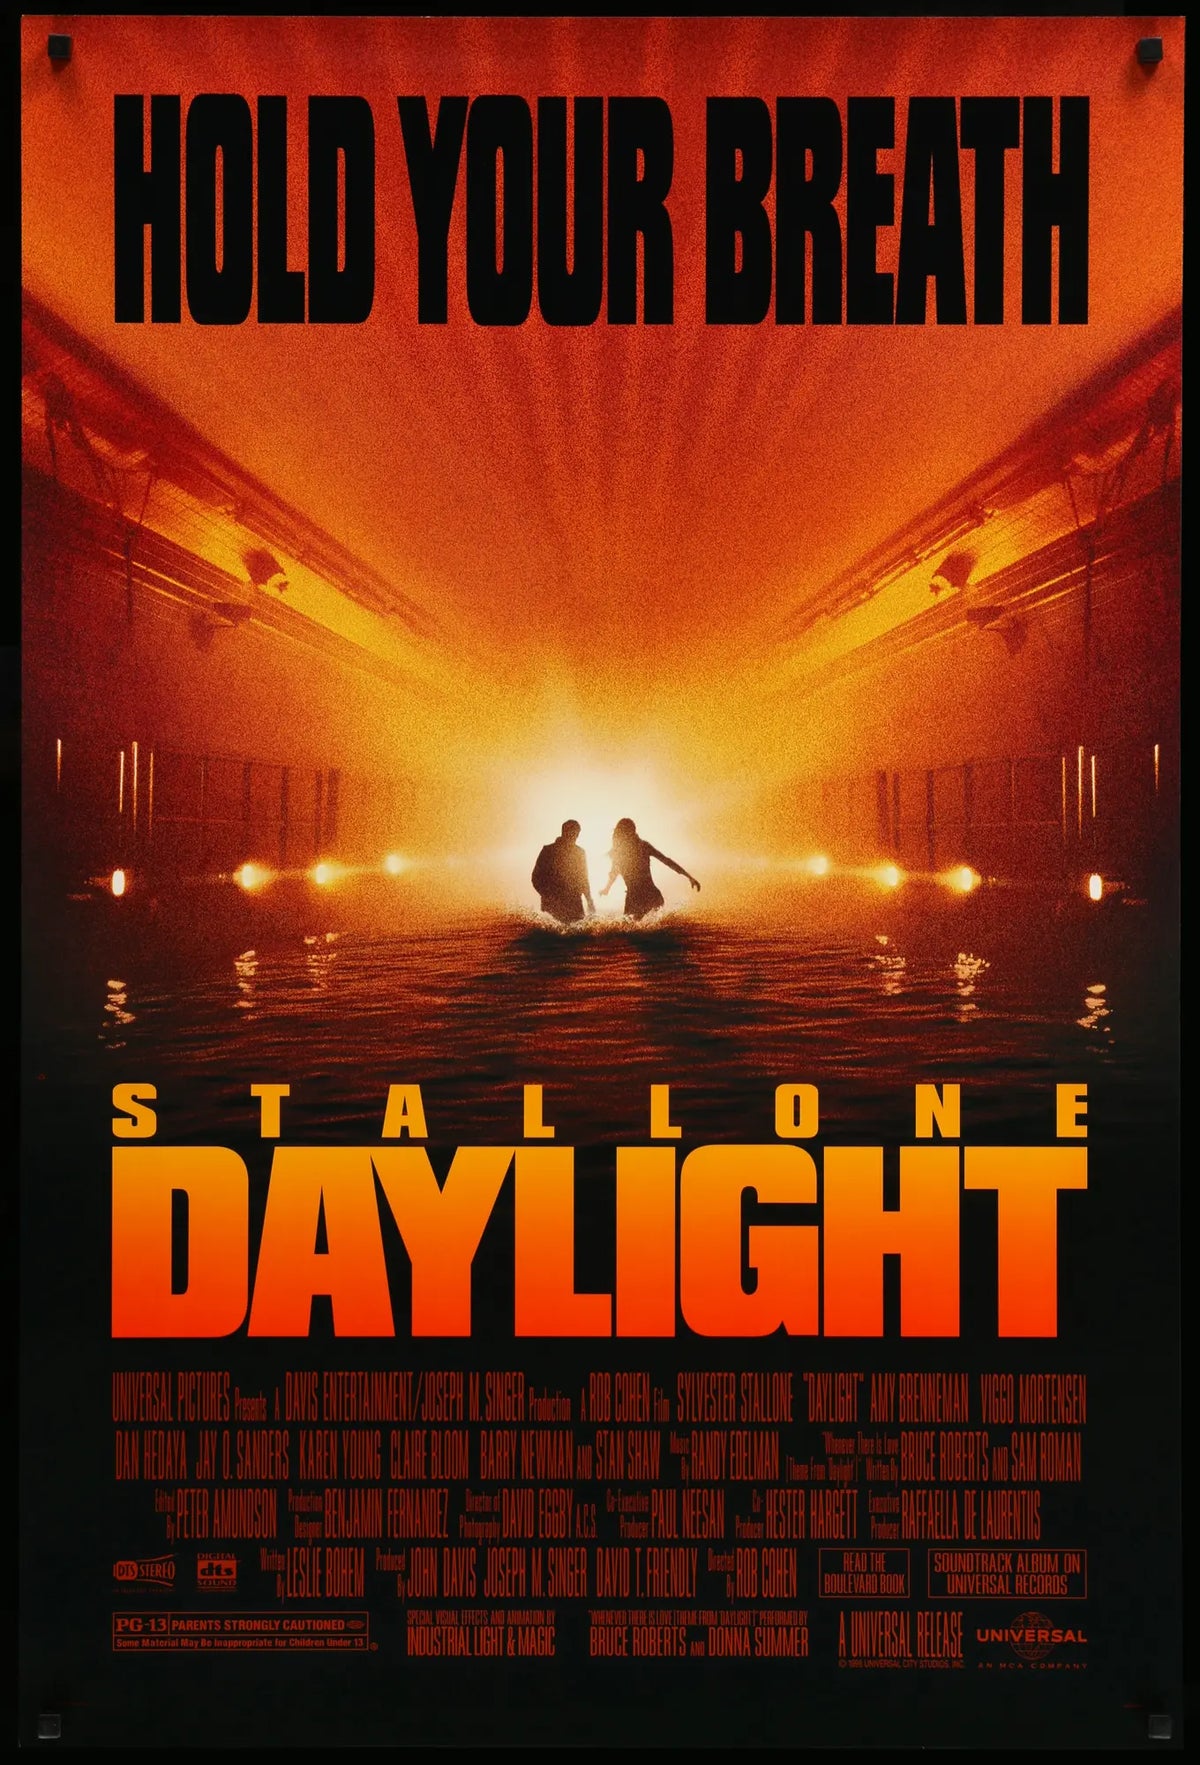 Daylight (1996) original movie poster for sale at Original Film Art